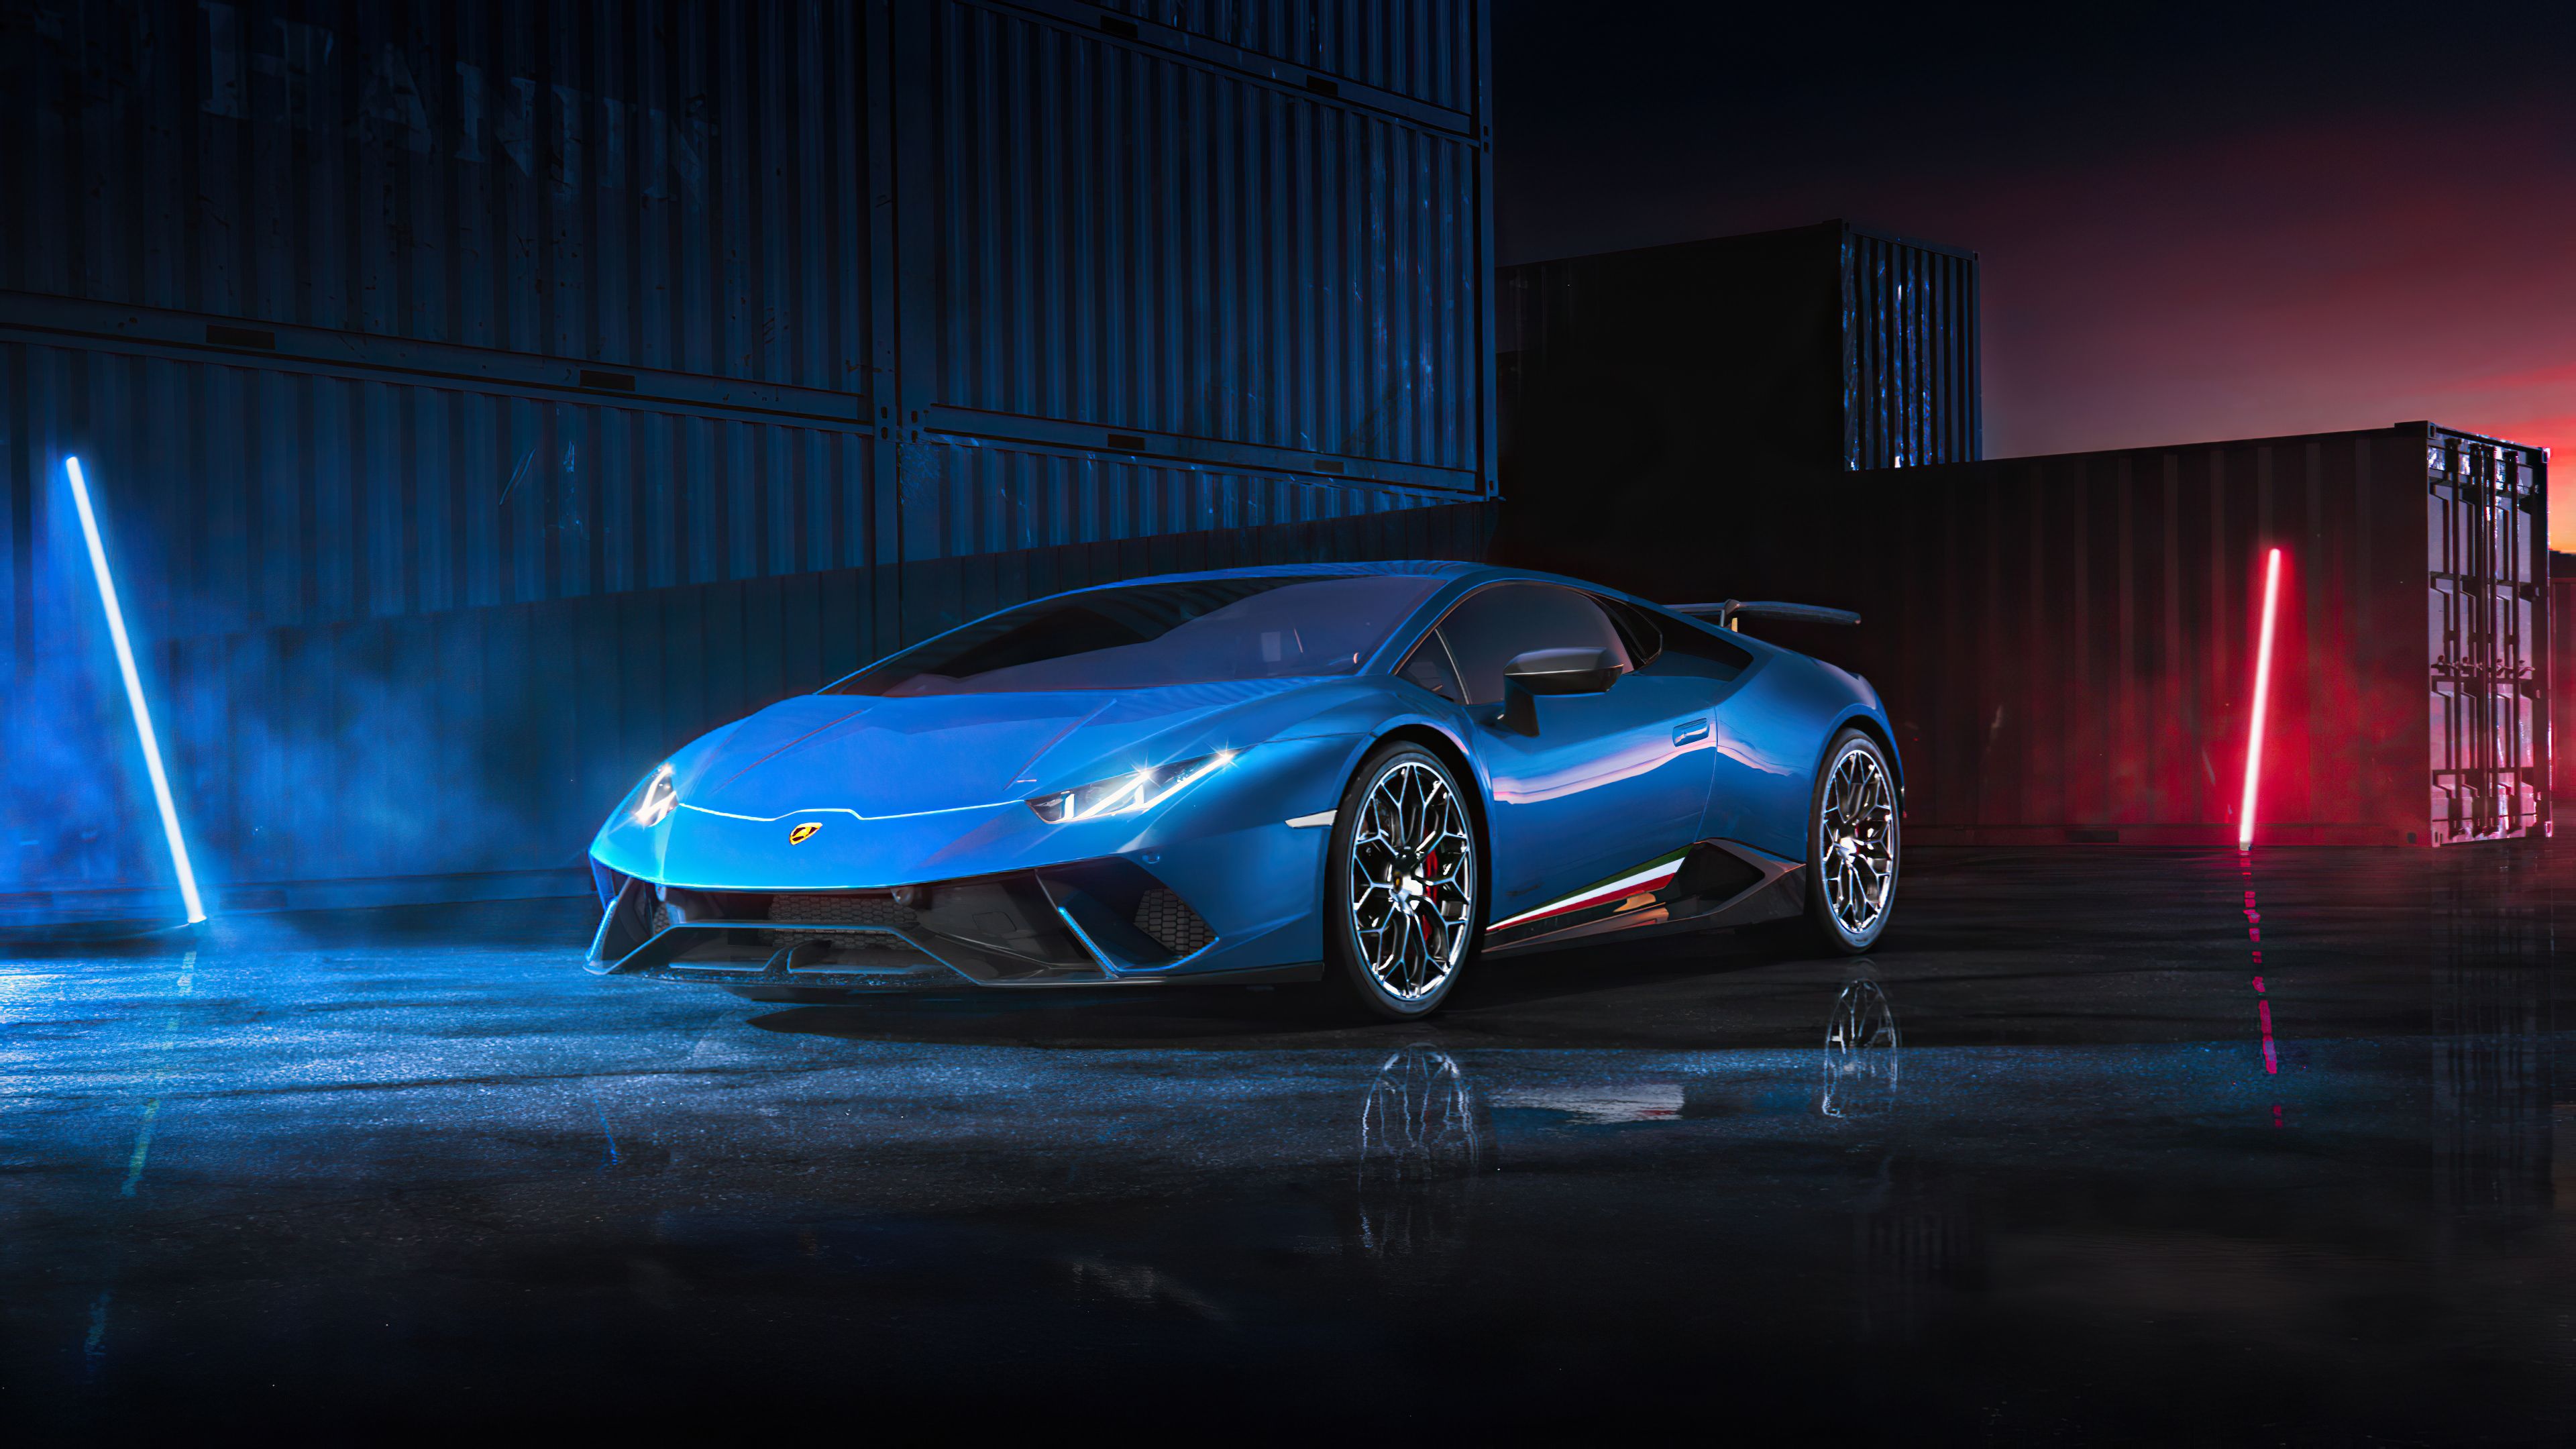 Blue Lamborghini Huracan 4k, HD Cars, 4k Wallpaper, Image, Background, Photo and Picture